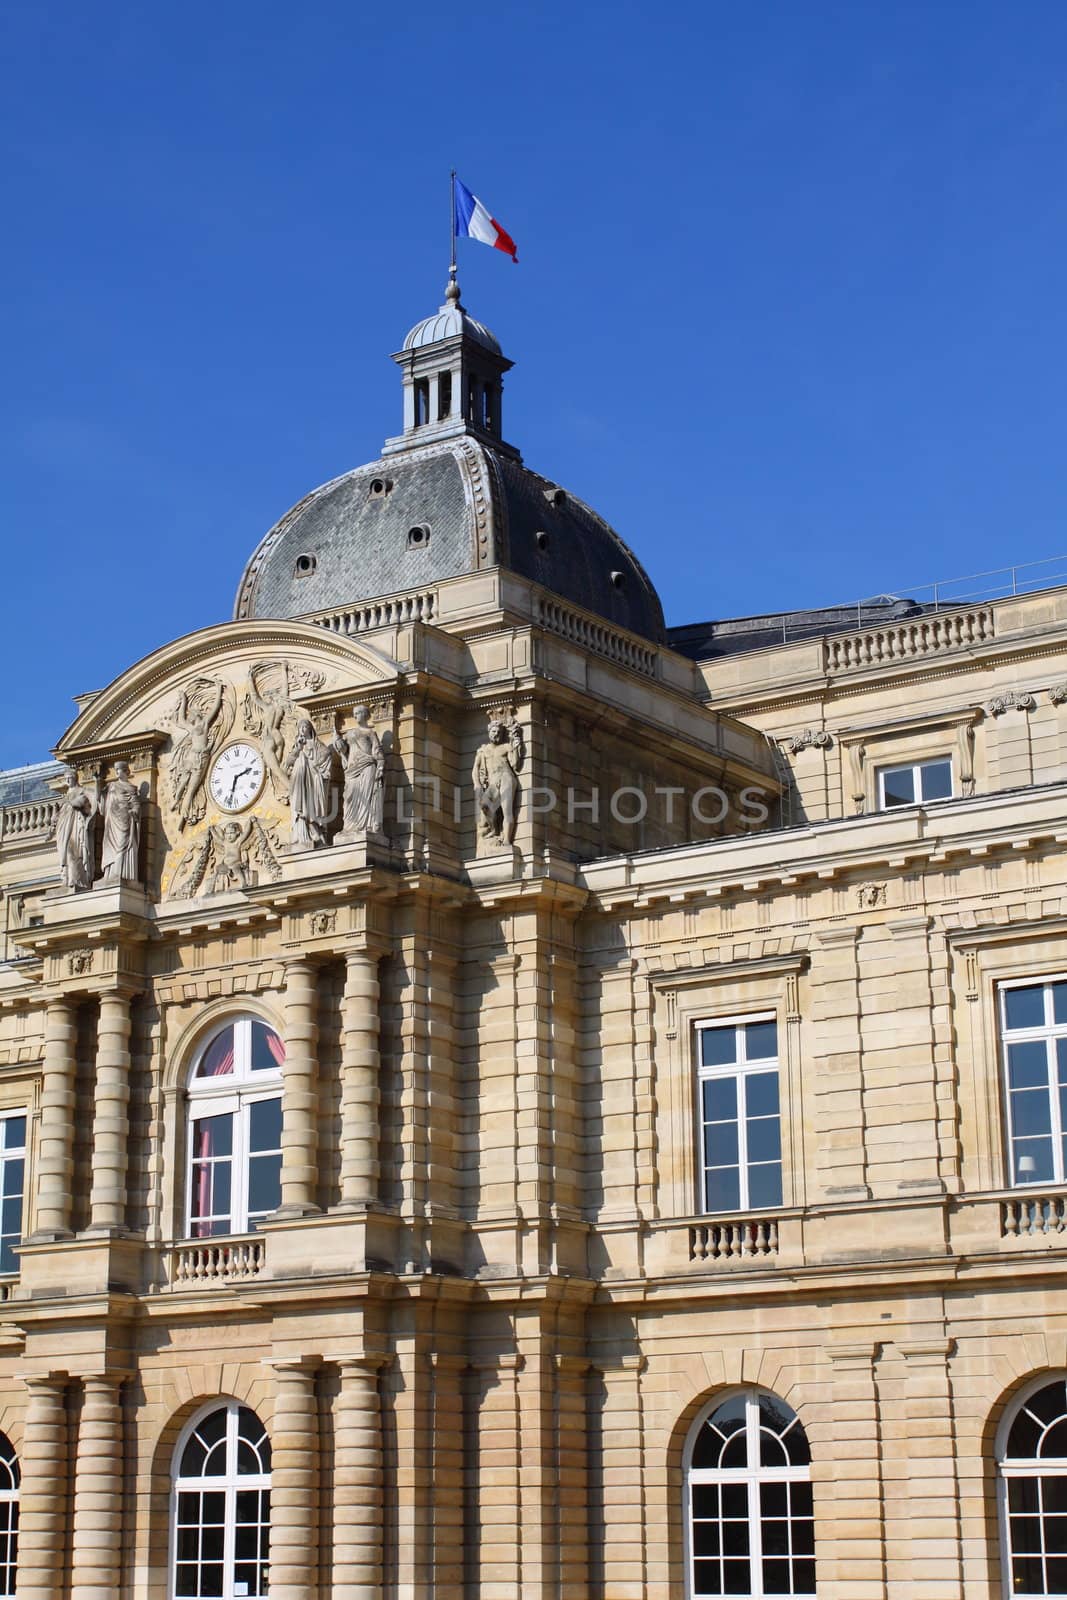 Luxemburg Palace in Paris